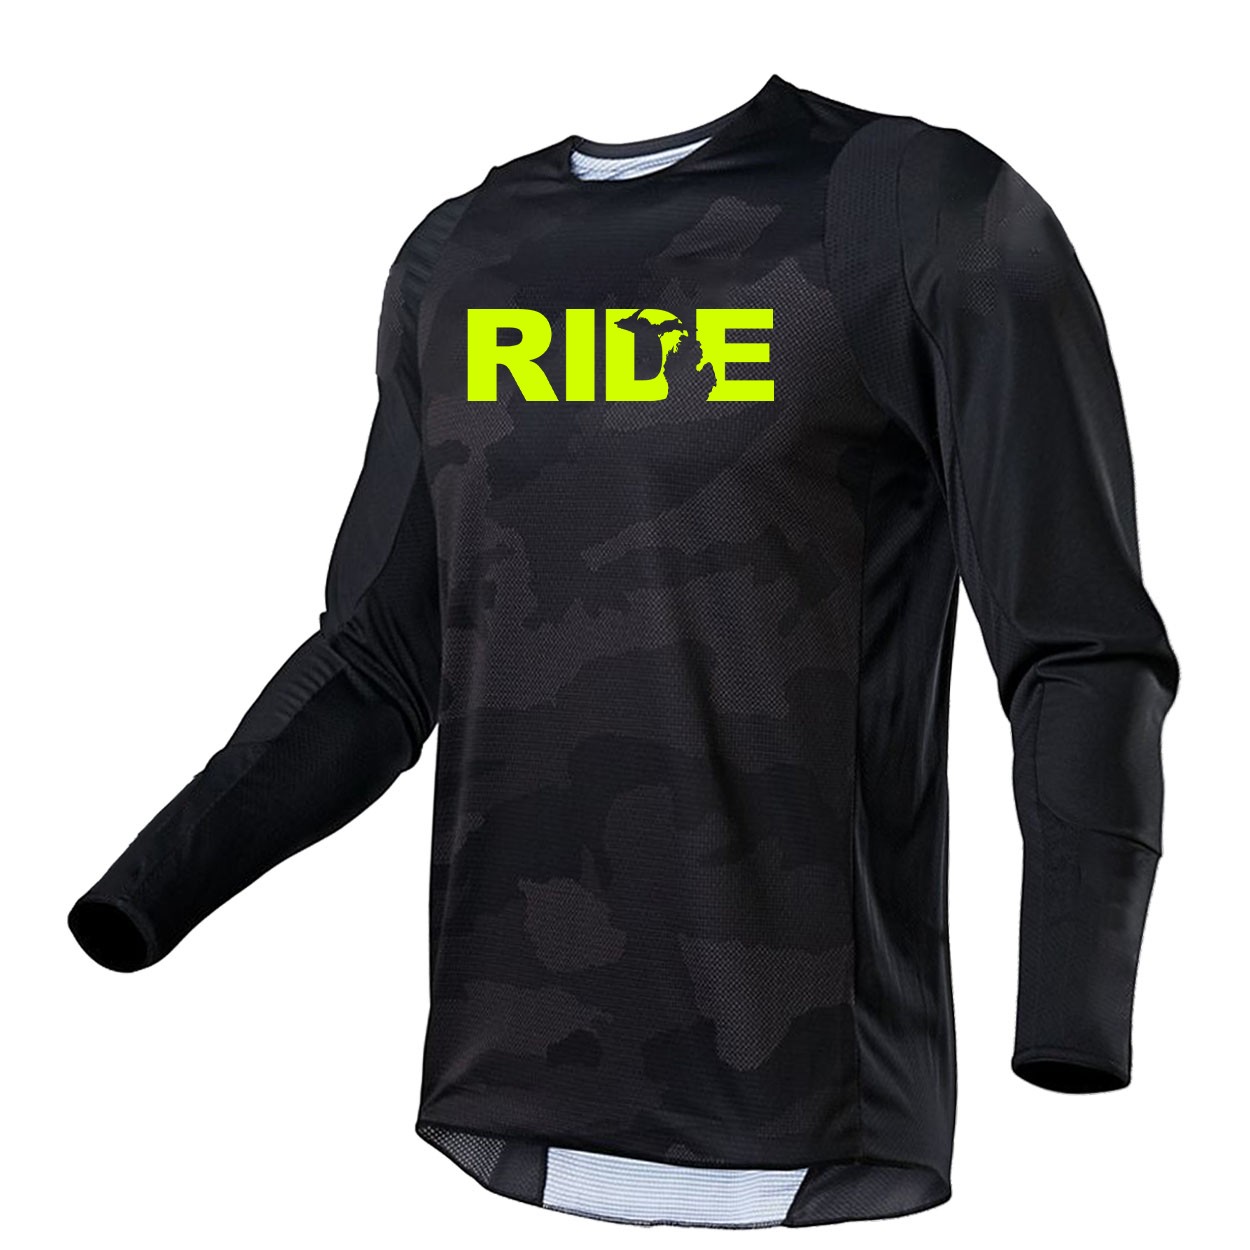 Ride Michigan Classic Performance Jersey Long Sleeve Shirt Black Camo (Hi-Vis Logo)